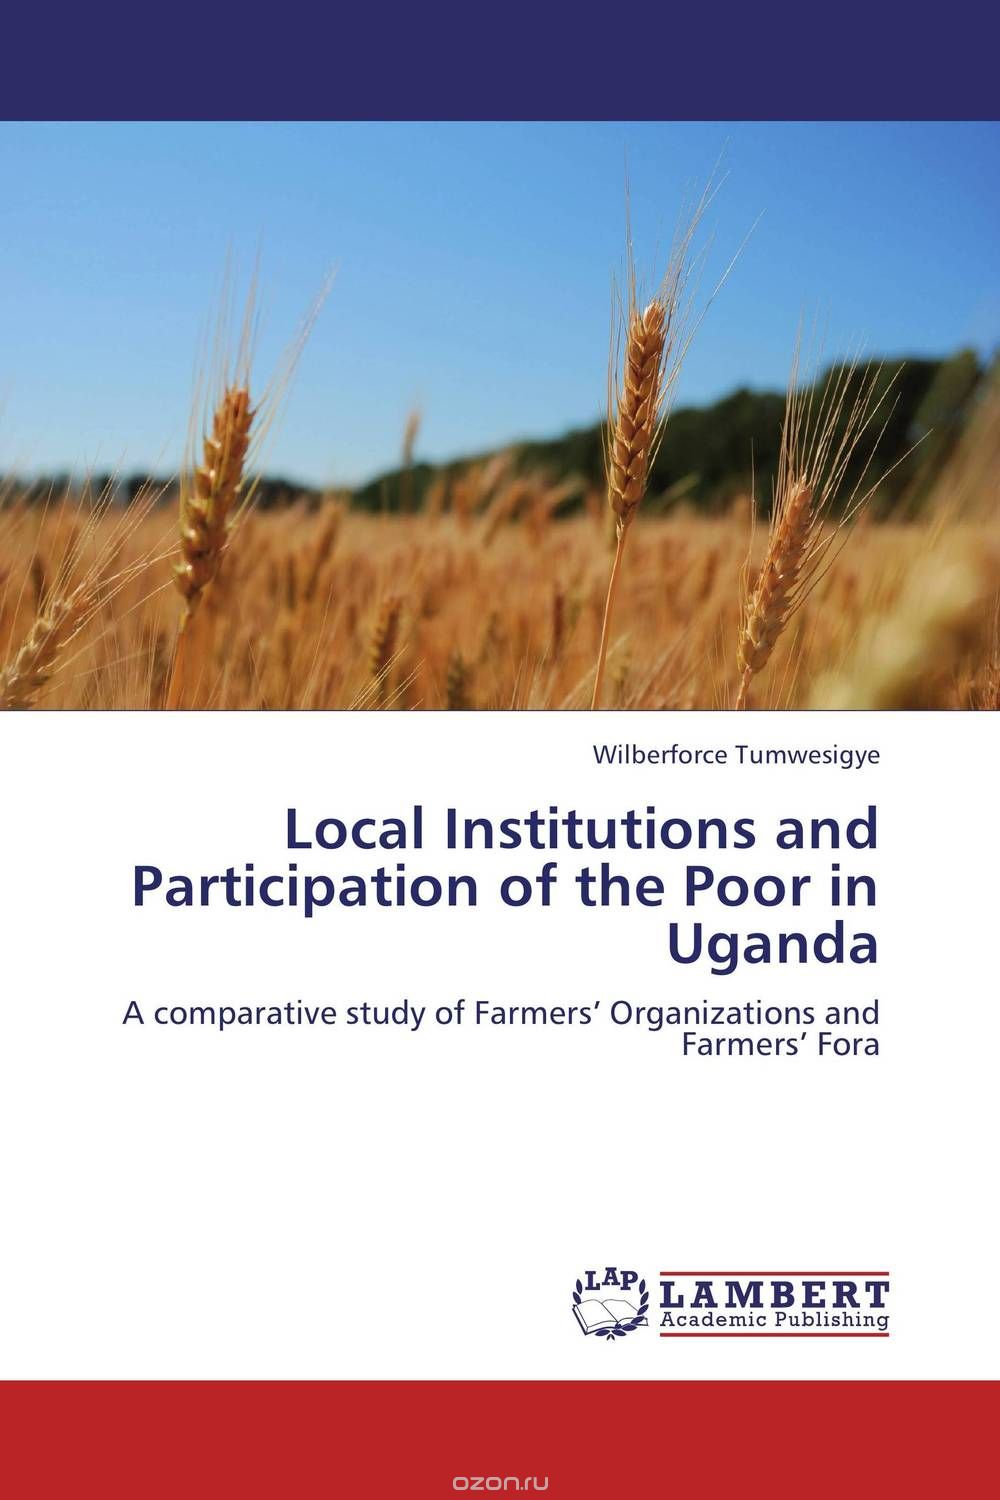 Скачать книгу "Local Institutions and Participation of the Poor in Uganda"